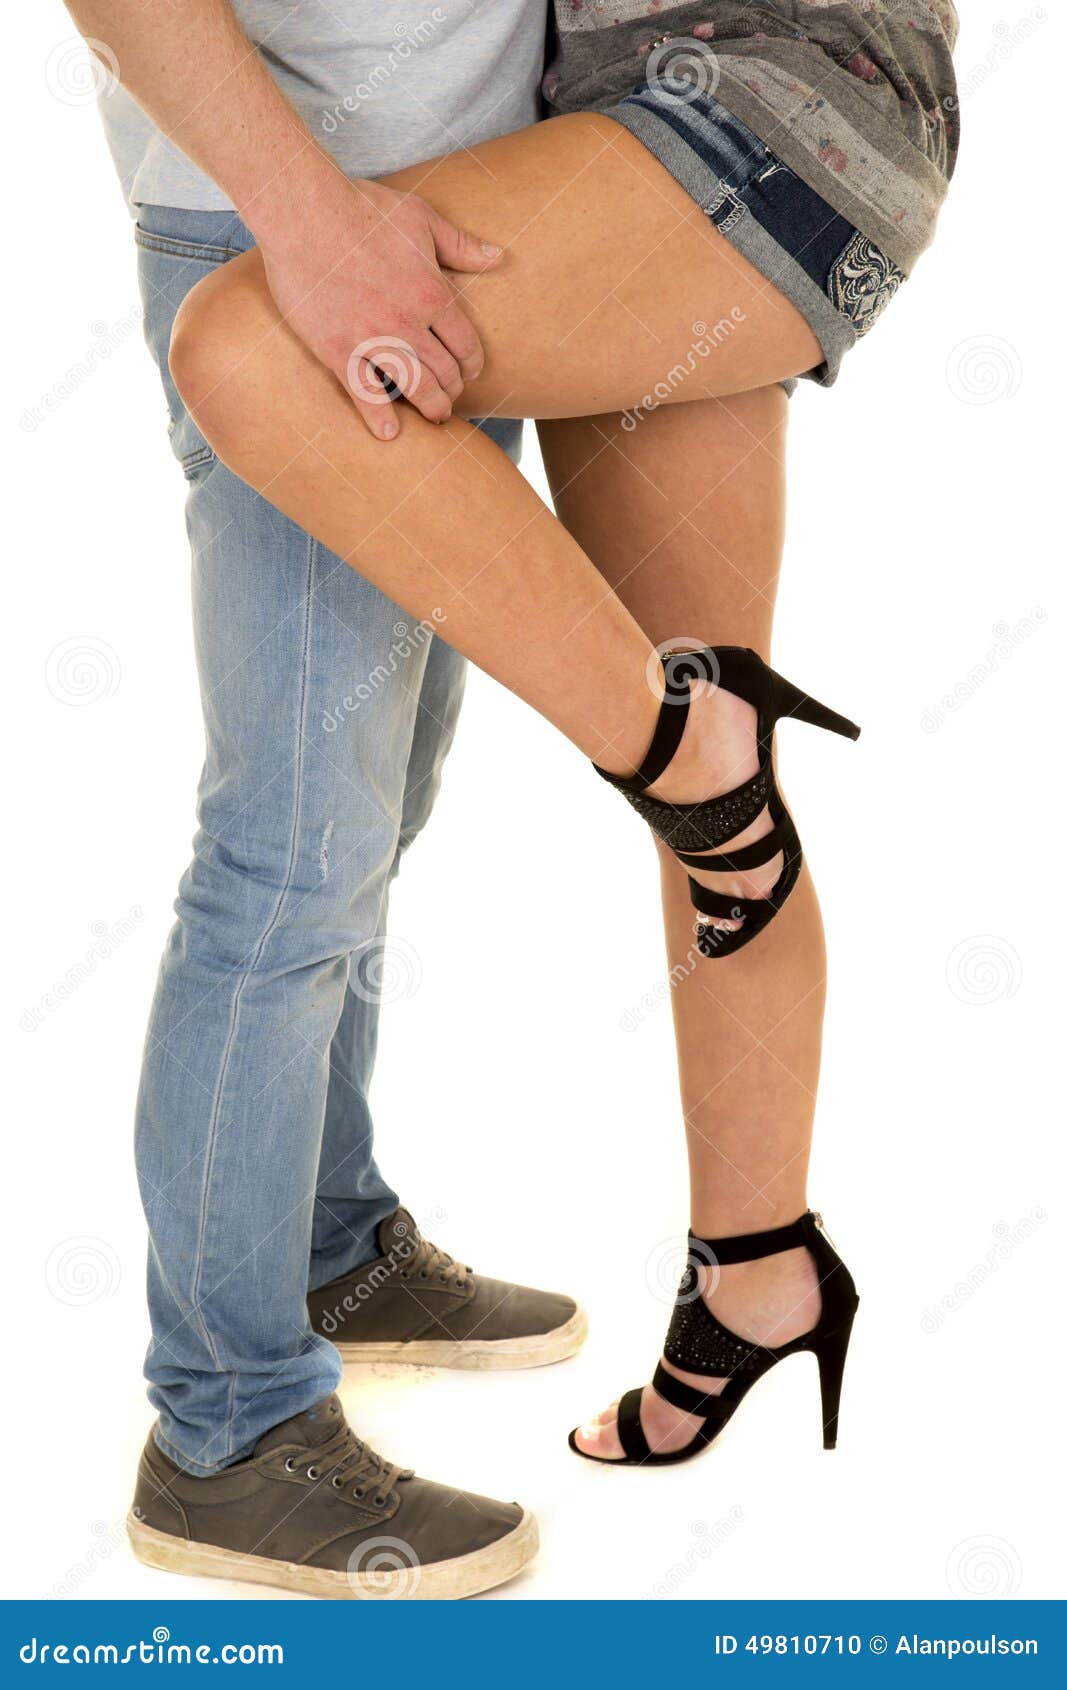 Муж держит ноги. Придерживает за ногу. Мужчина у женских ног. Девушка нога на ногу. Женские ножки на мужчине.